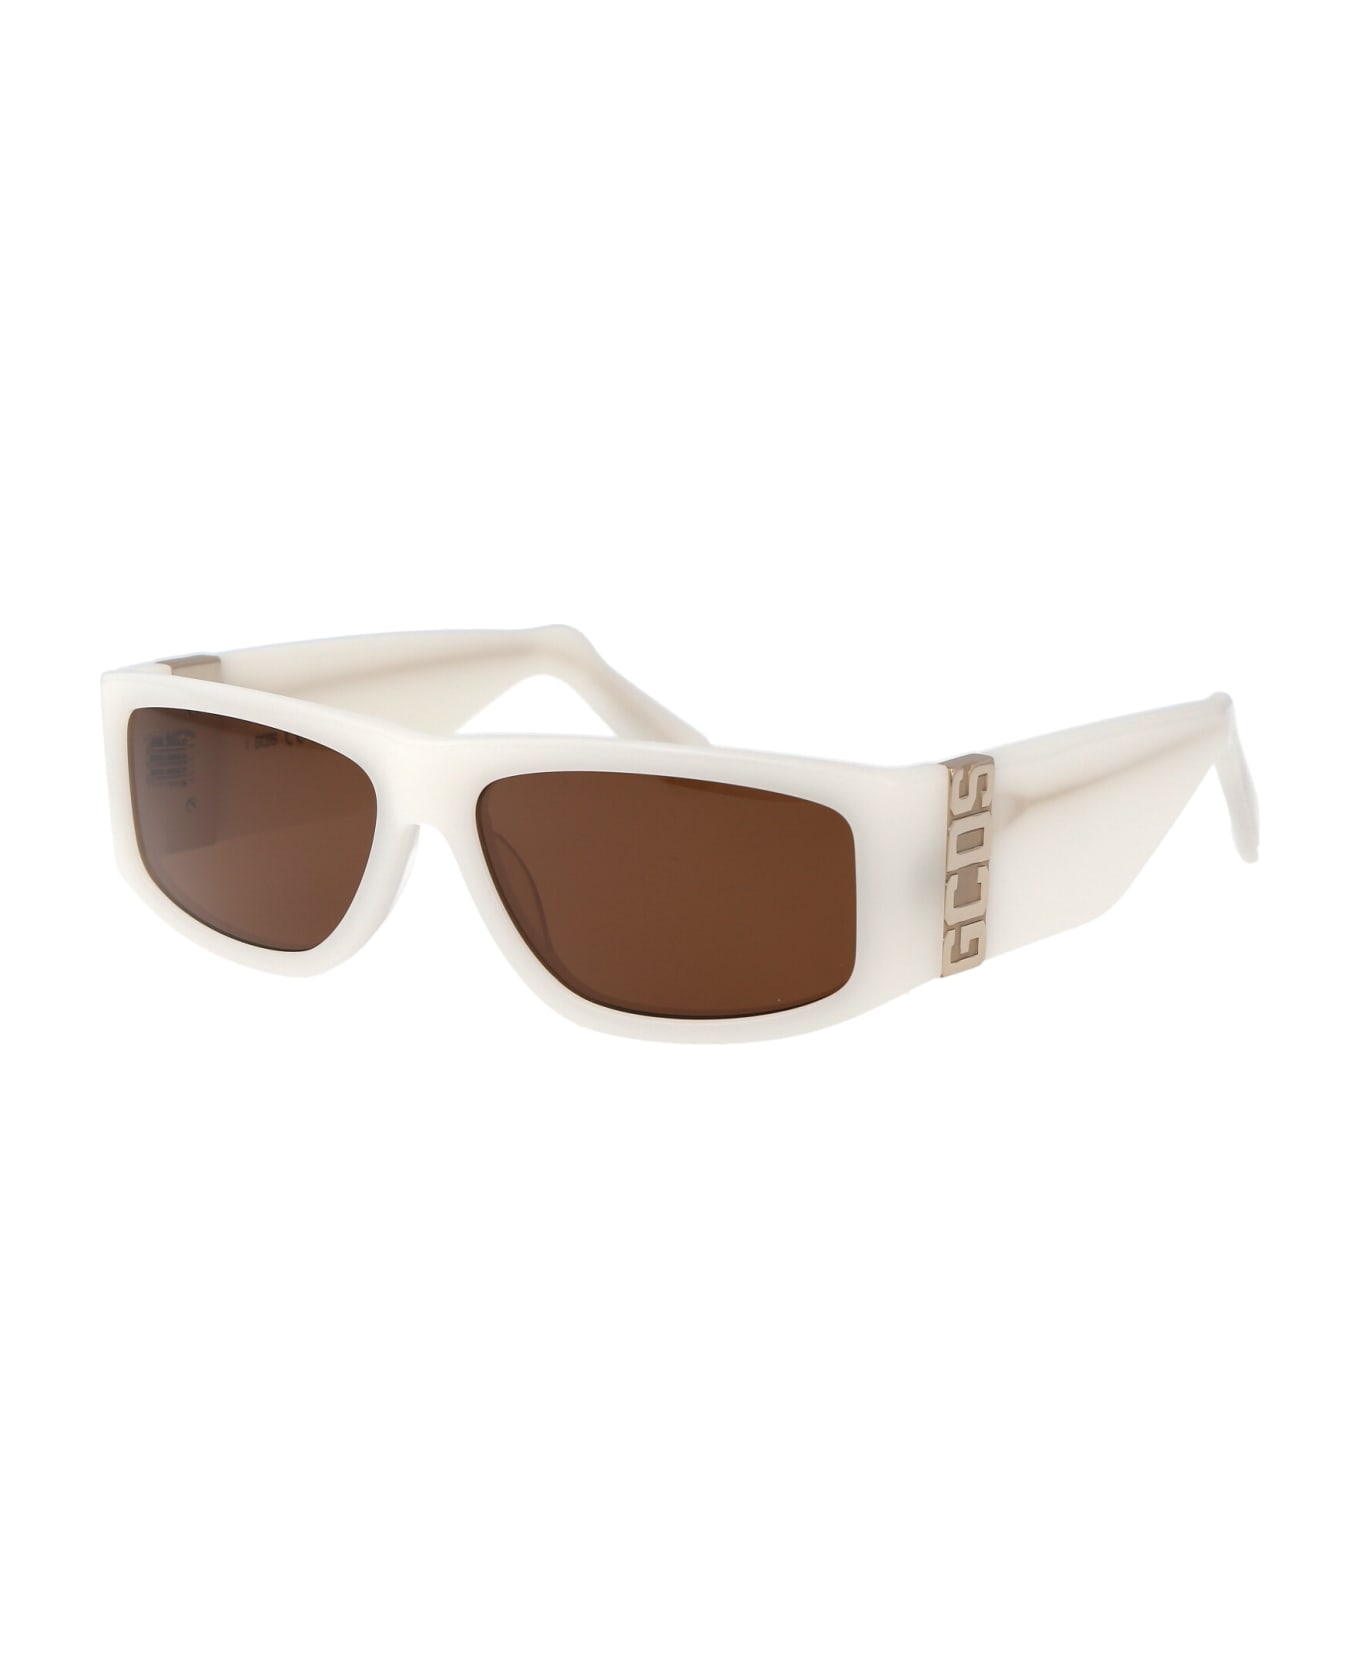 GCDS Gd0037 Sunglasses - 21E Bianco/Marrone